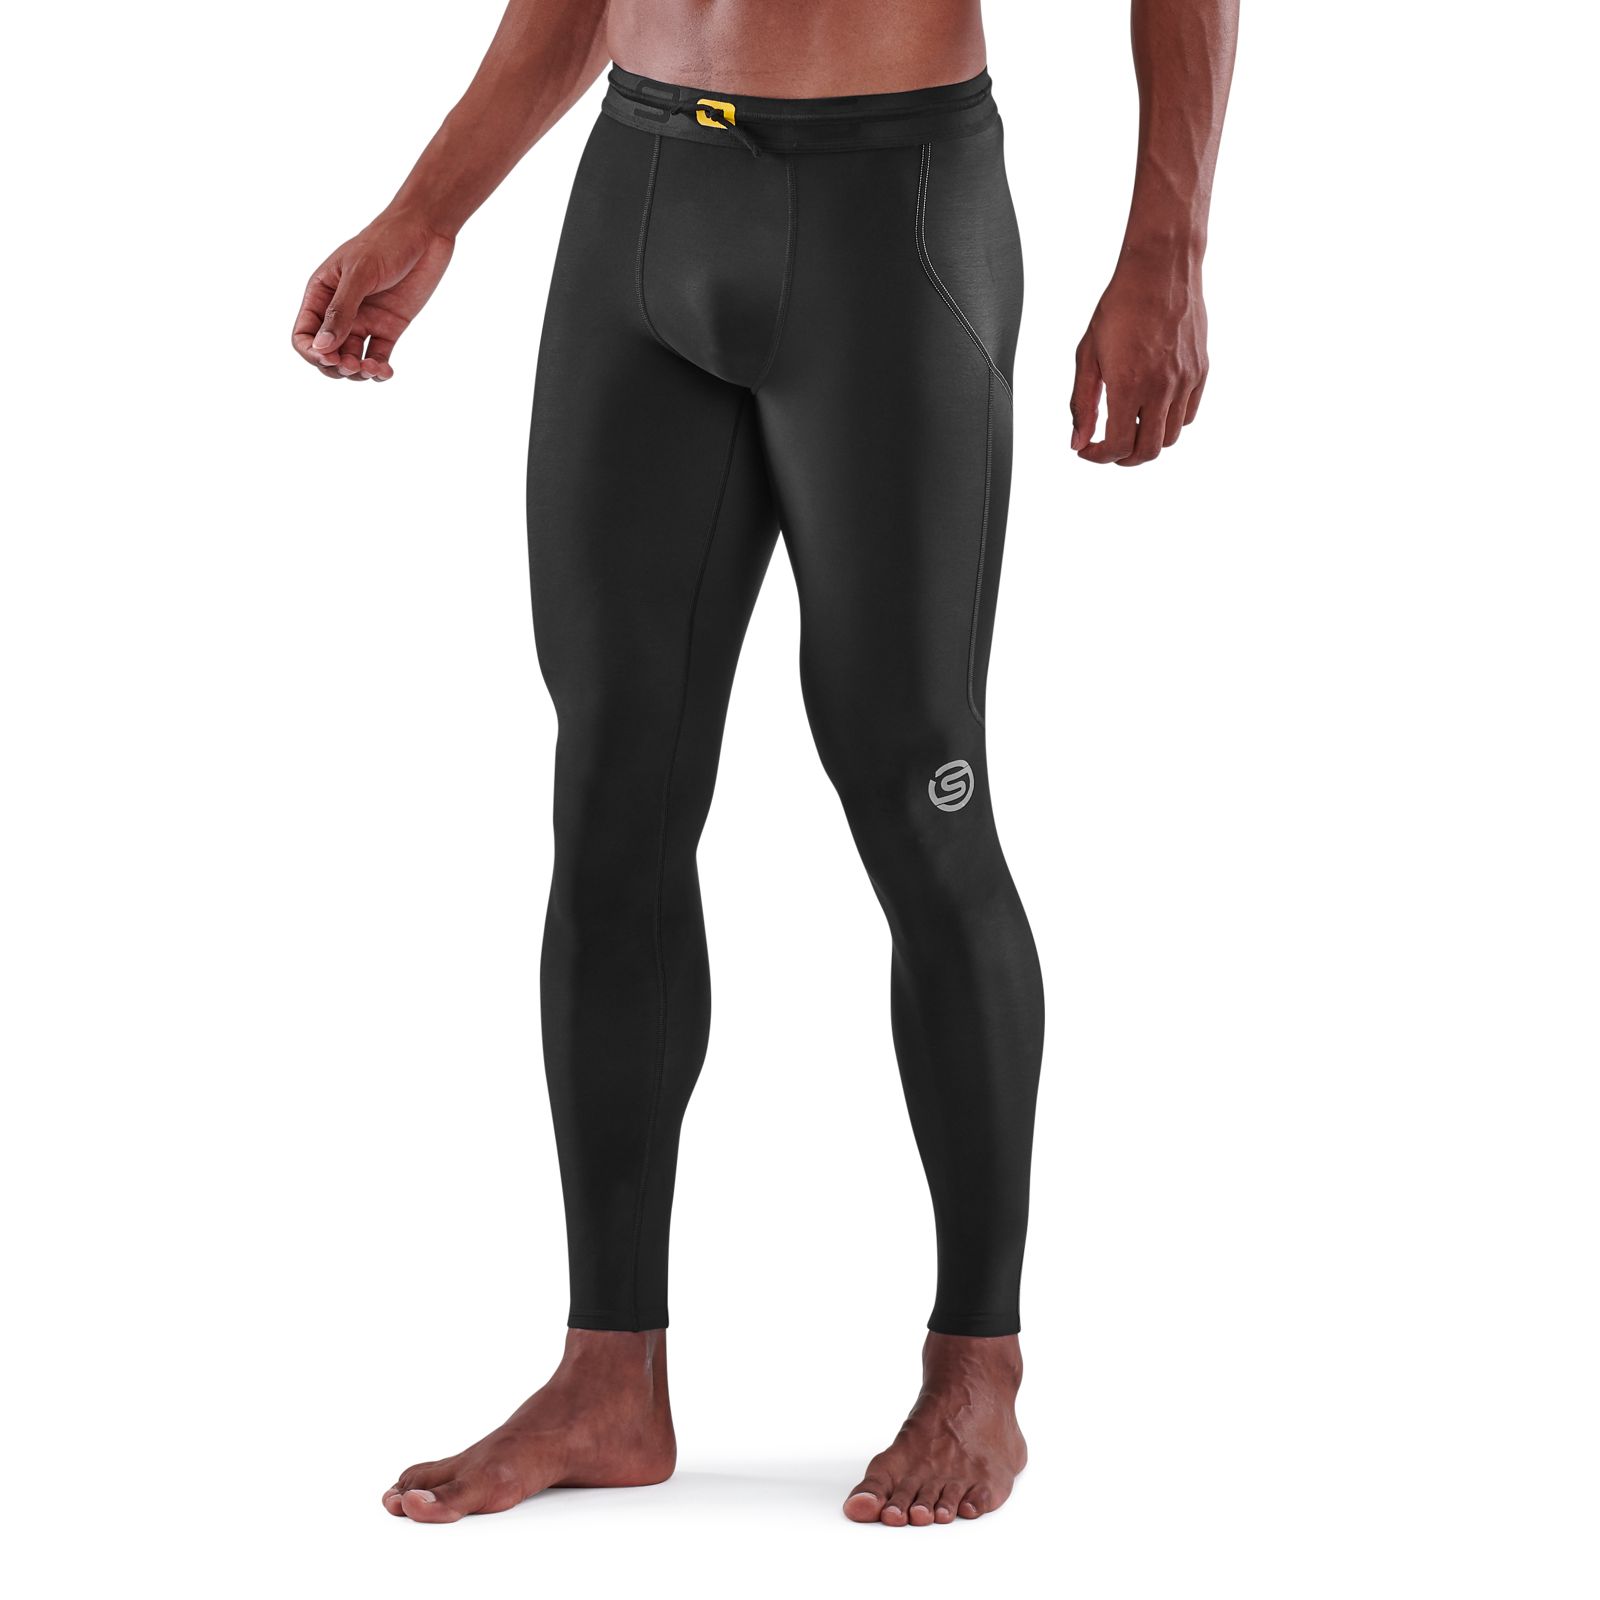 Thermal leggings 320den in dark brown, 4.99€